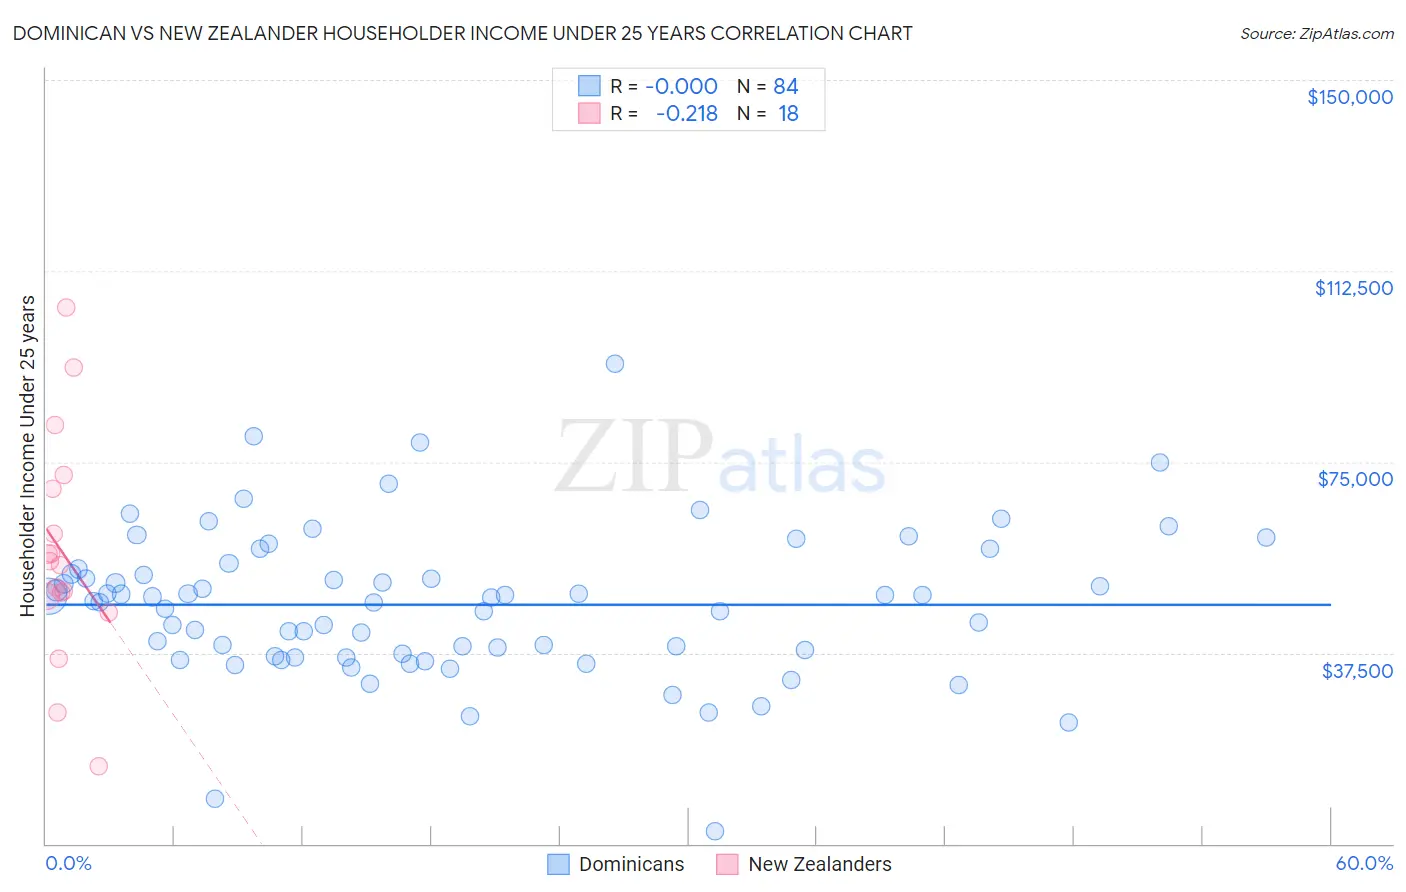 Dominican vs New Zealander Householder Income Under 25 years